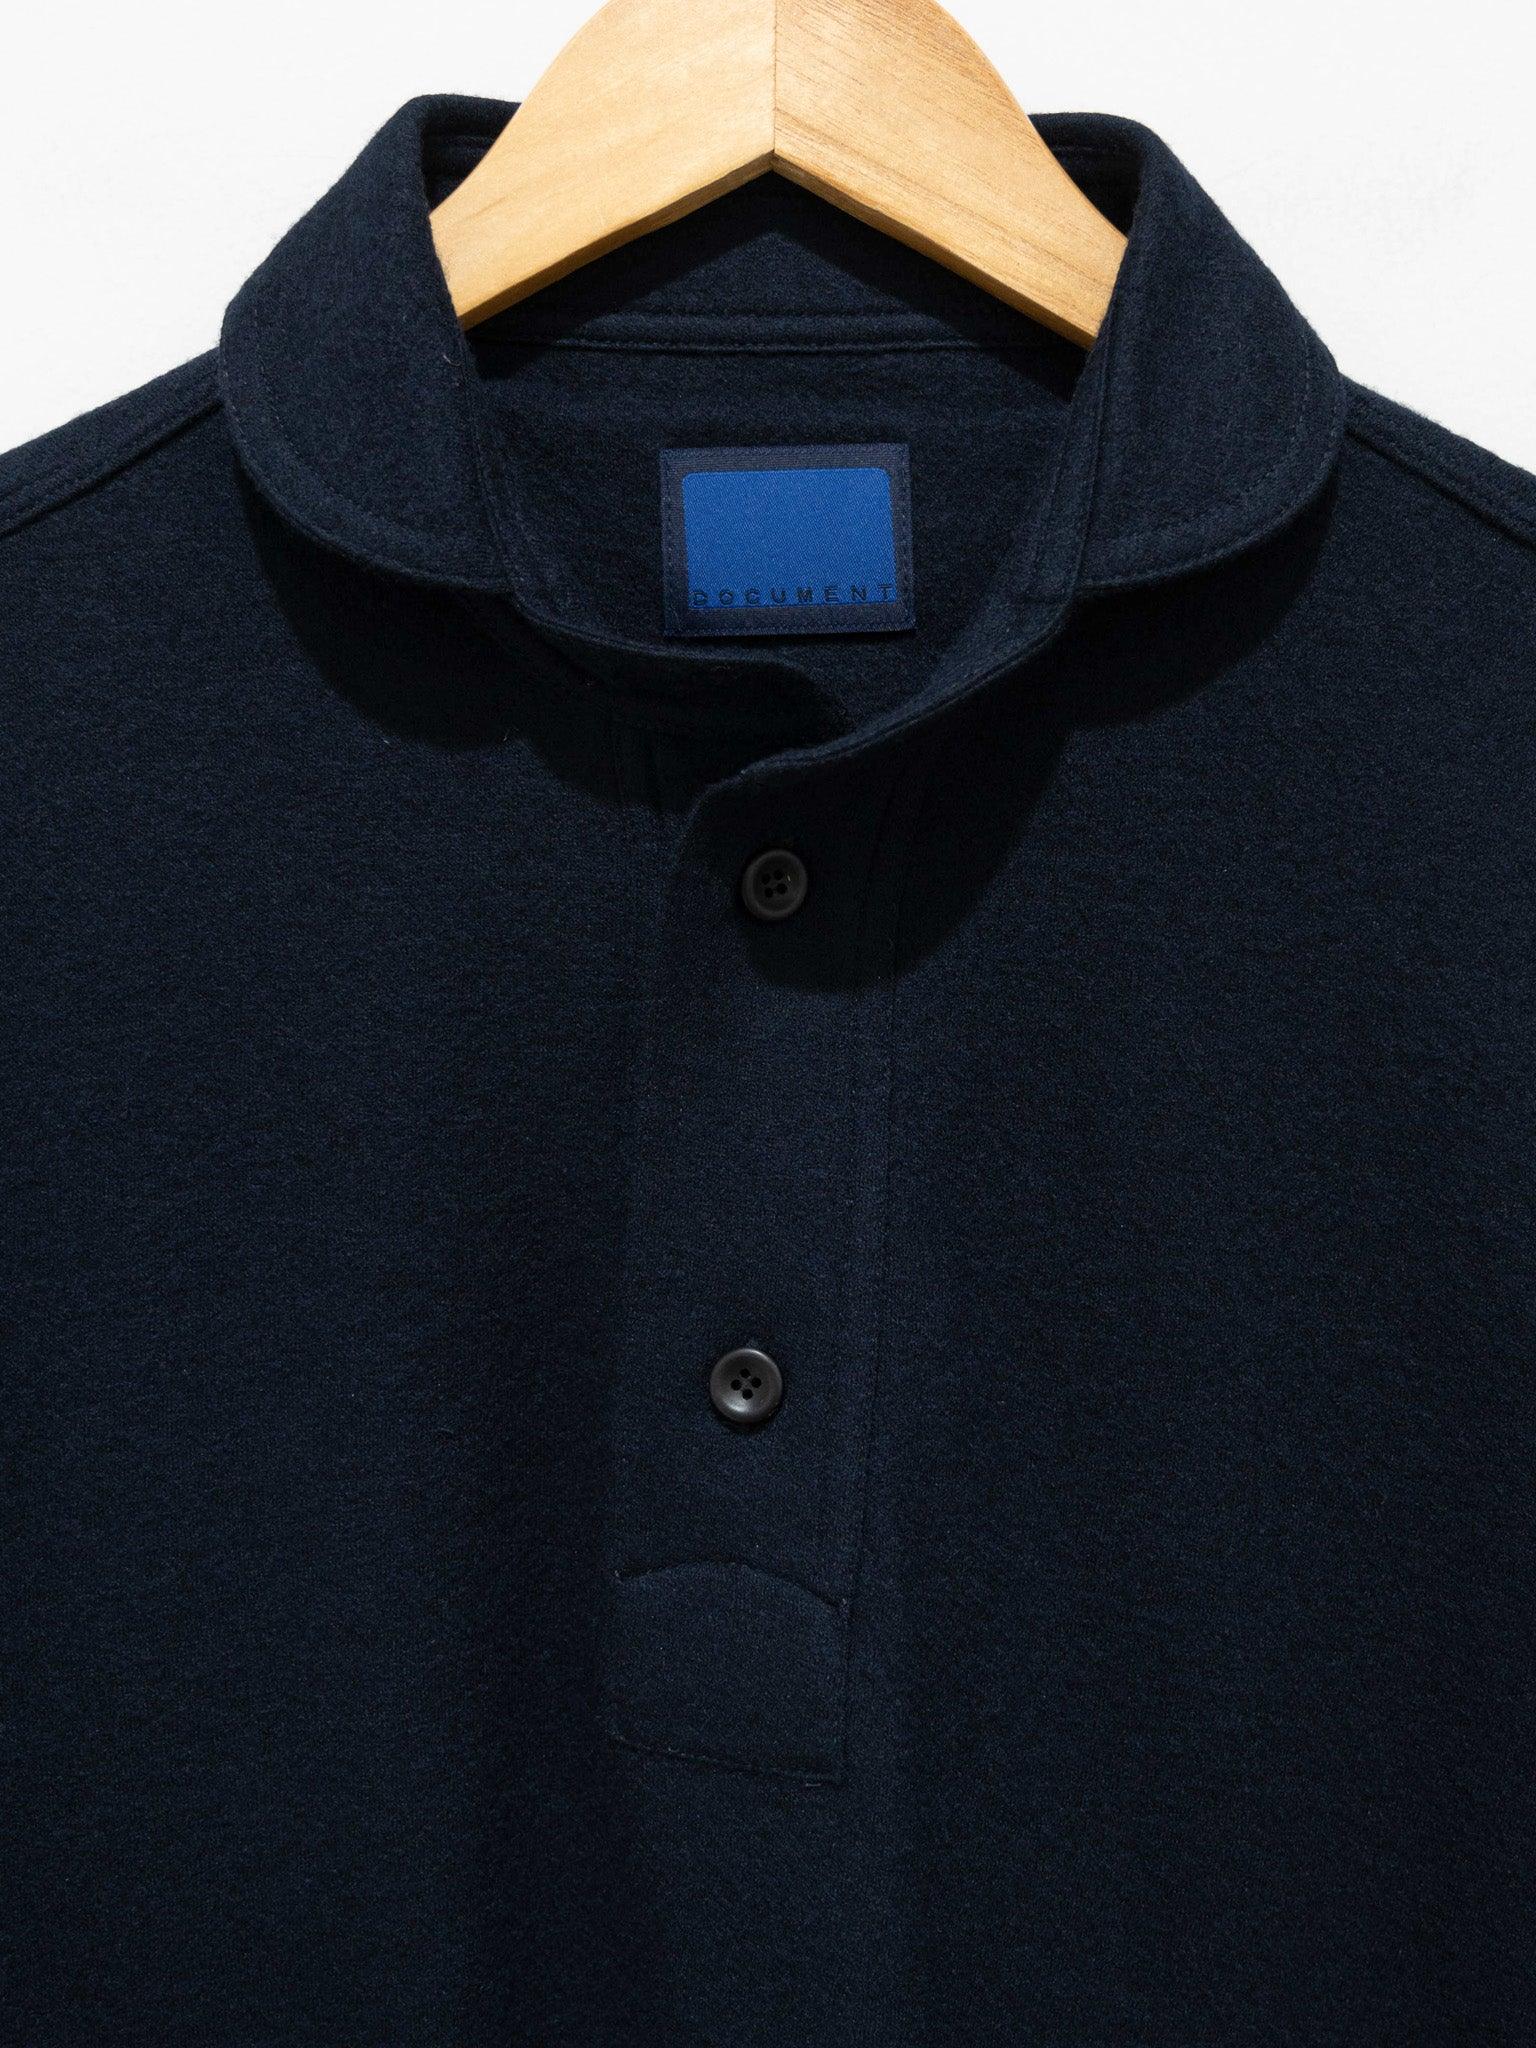 Namu Shop - Document Wool Jersey French Round Collar Shirt - Navy